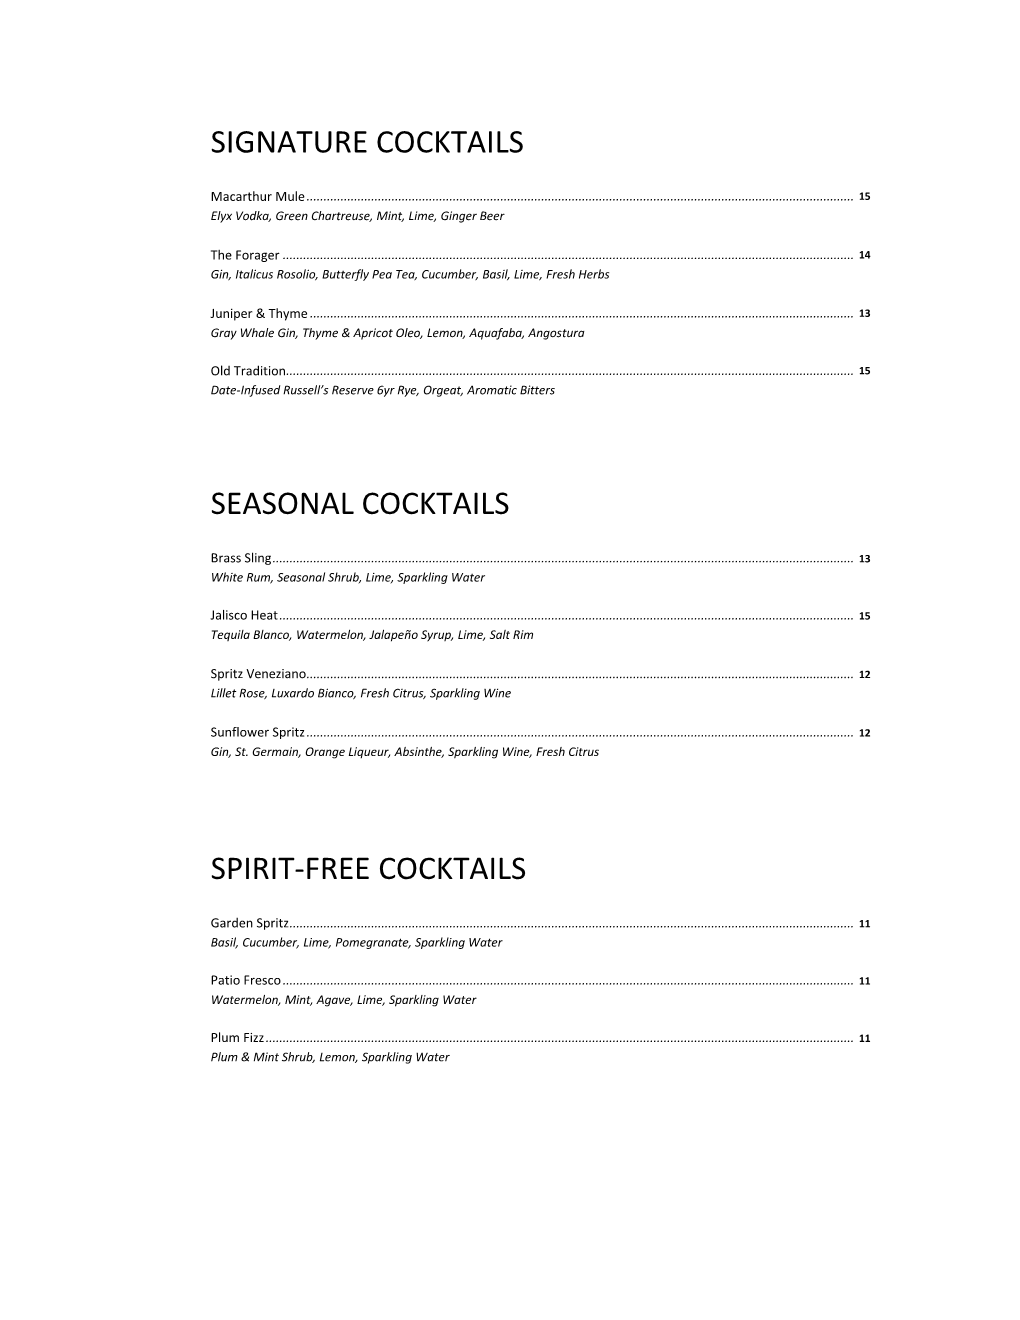 Signature Cocktails Seasonal Cocktails Spirit-Free